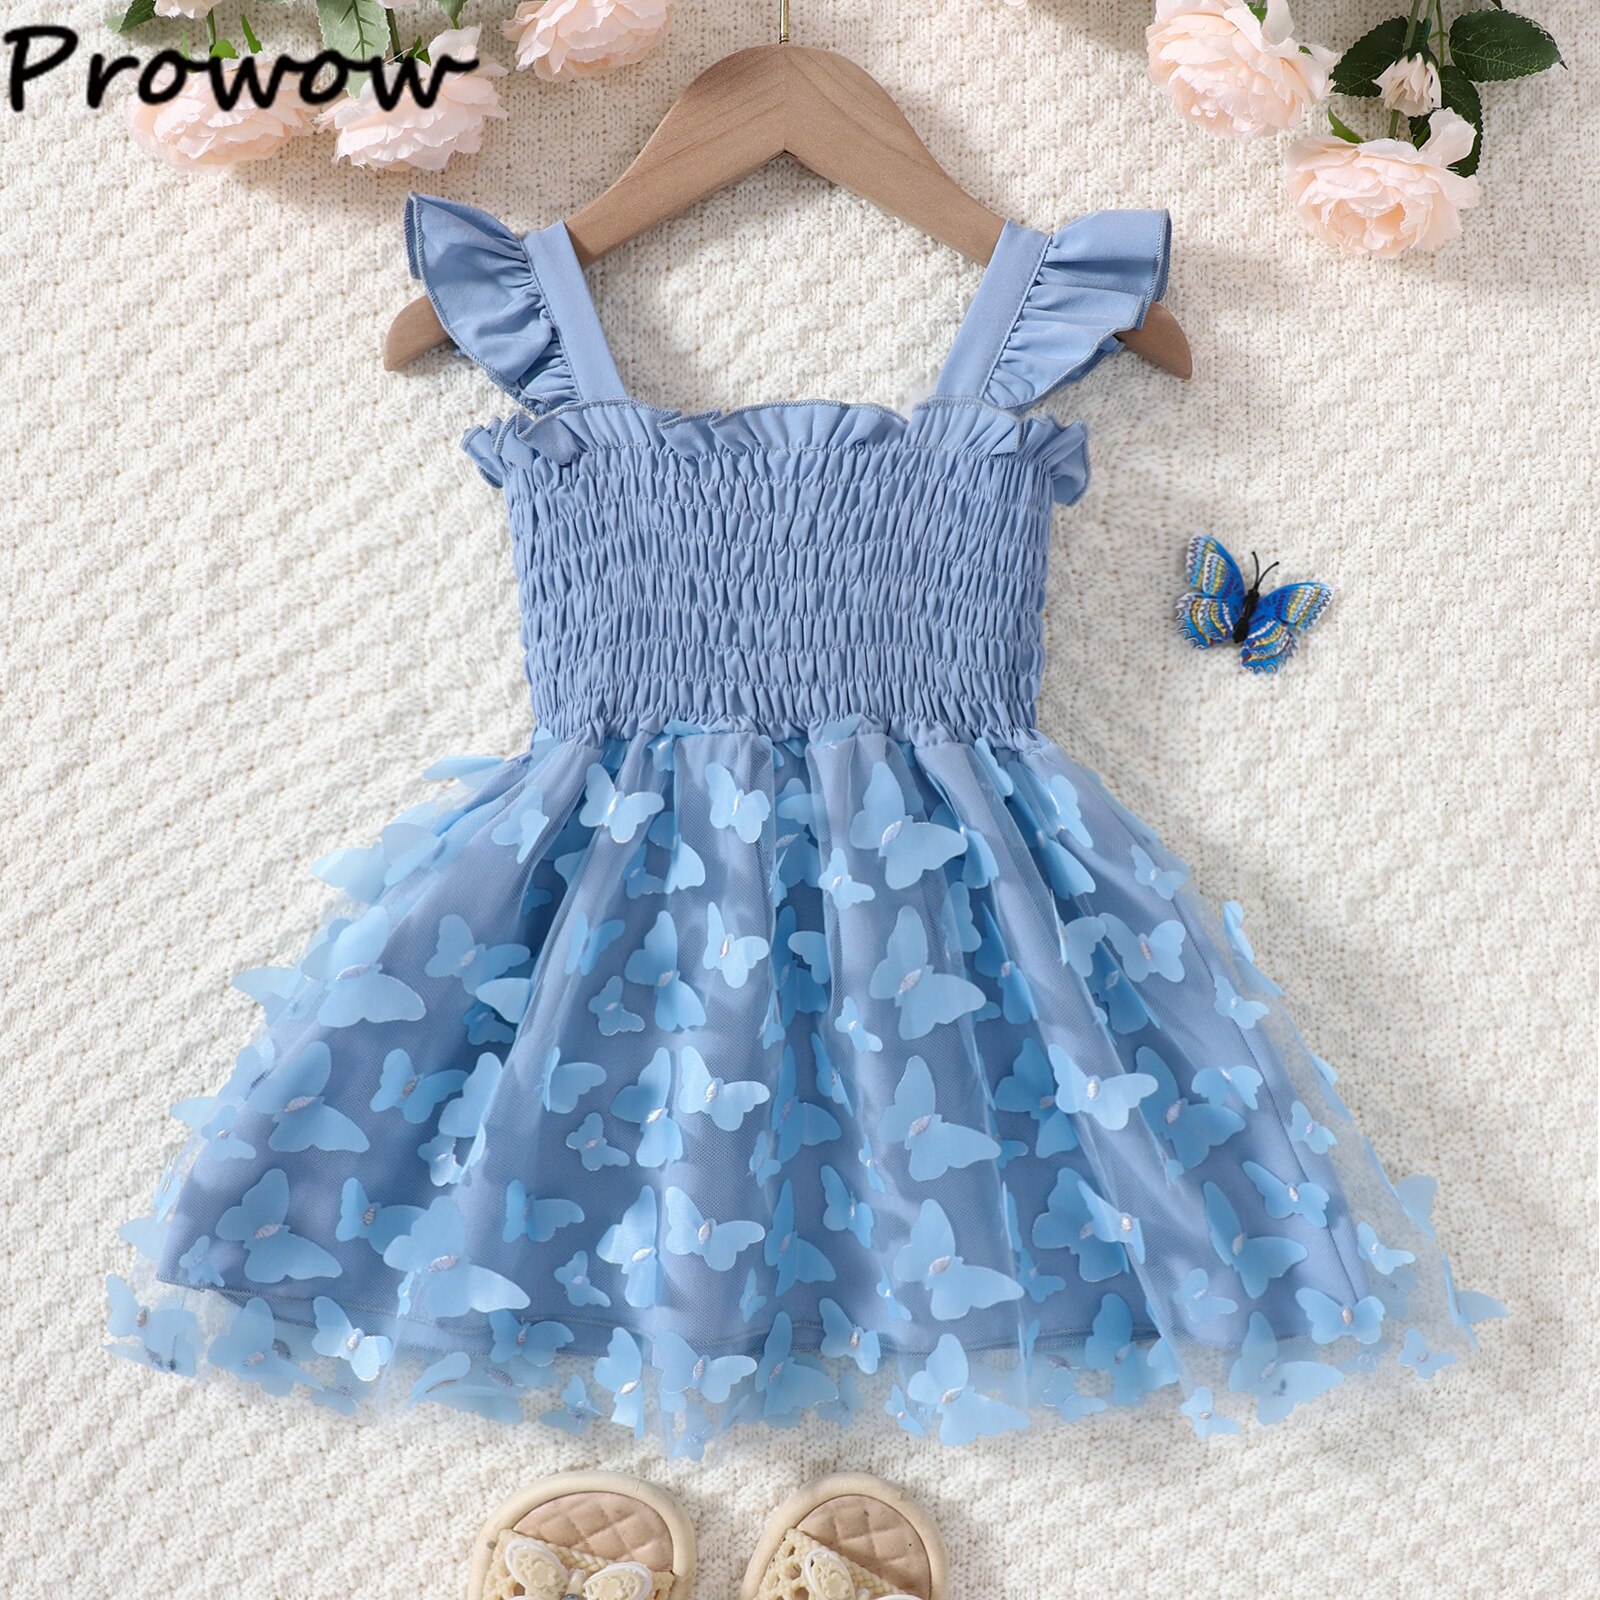 Prowow-1-5Y-Girl-Birthday-Dresses-Summer-Sleeveless-Spaghetti-Peplum-Butterfly-Child-Dress-For-Girls-Baby-5